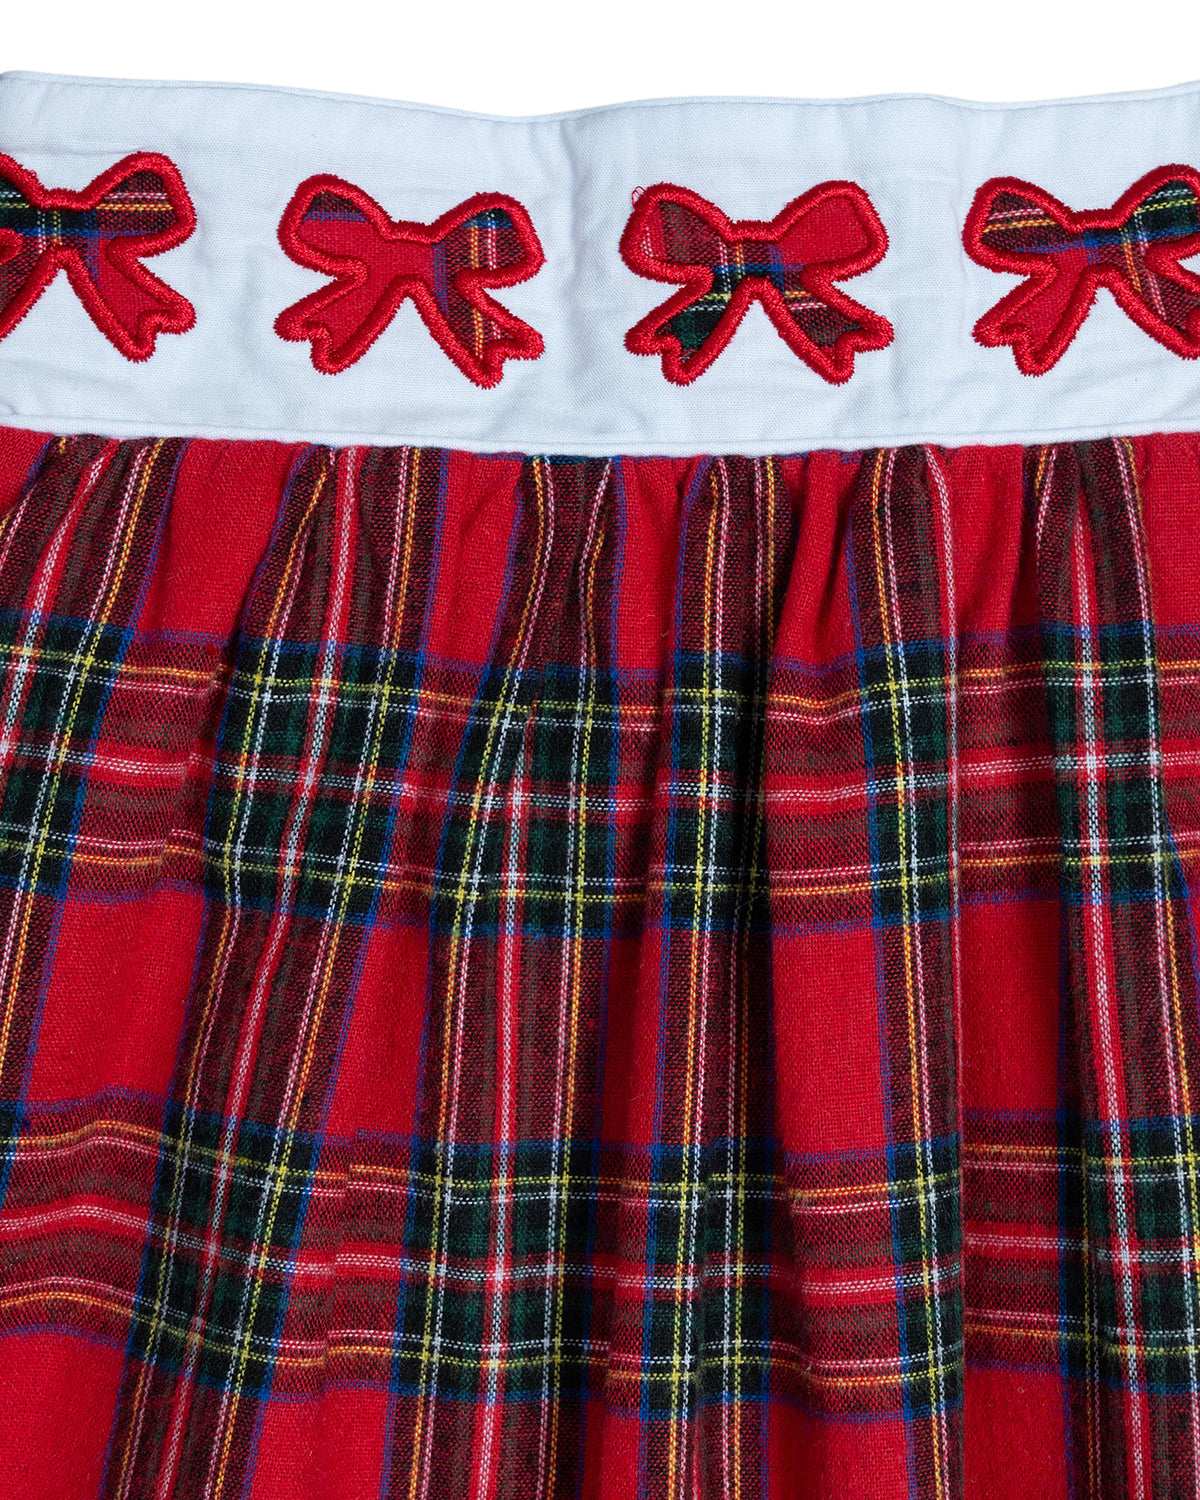 Red Tartan Plaid Bow Skirt- FINAL SALE